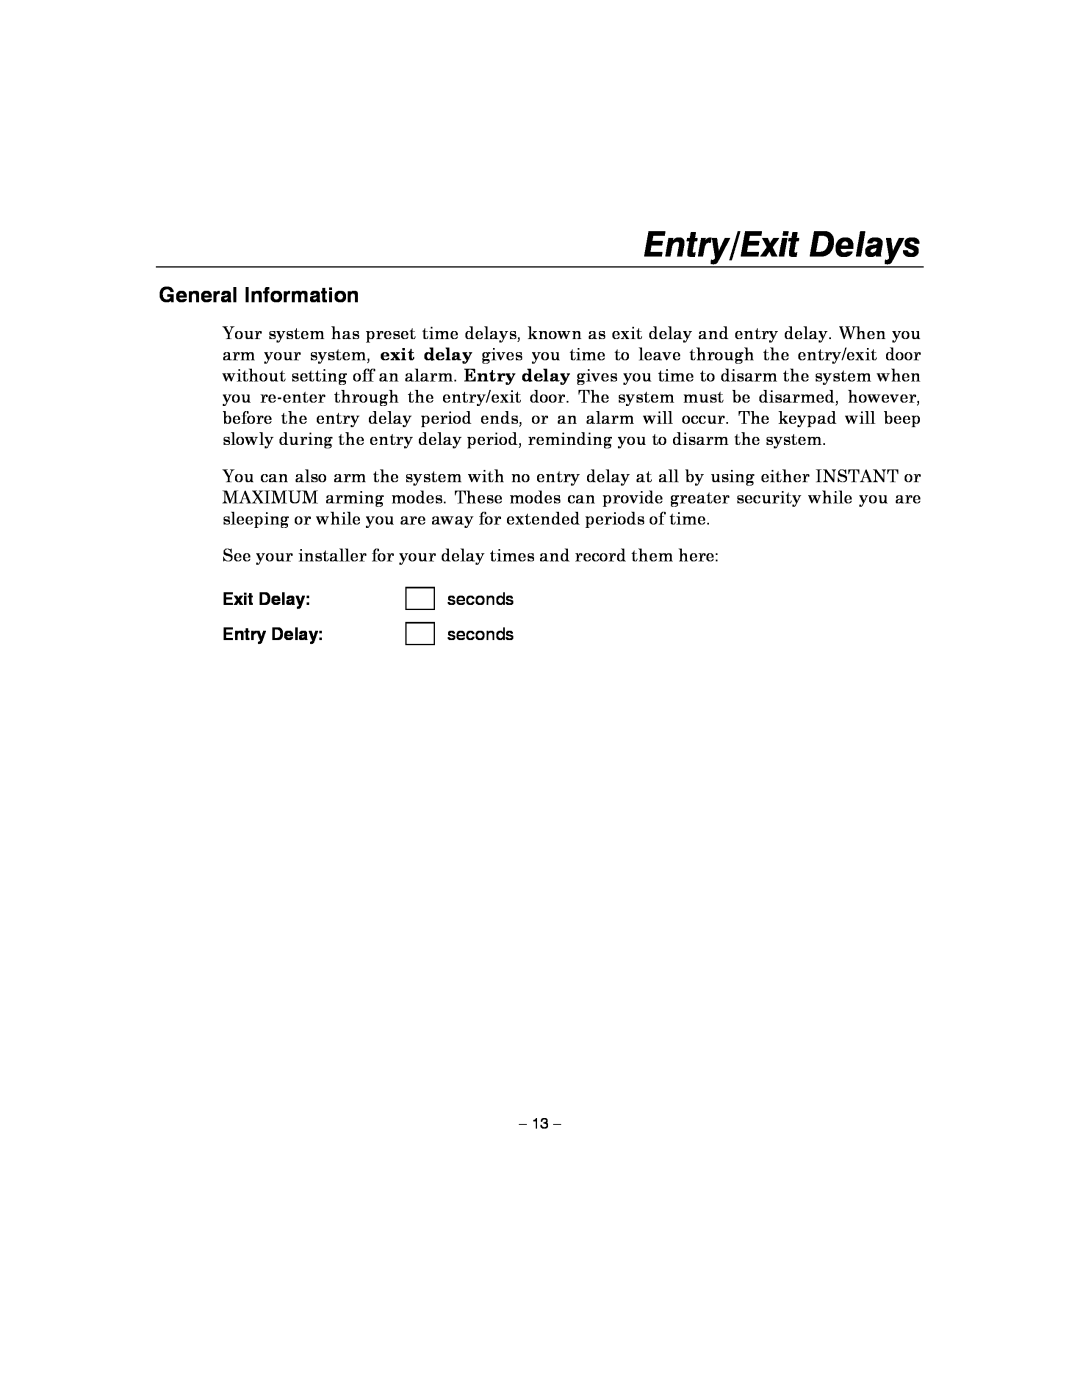 Honeywell 4110XM manual Entry/Exit Delays, General Information 